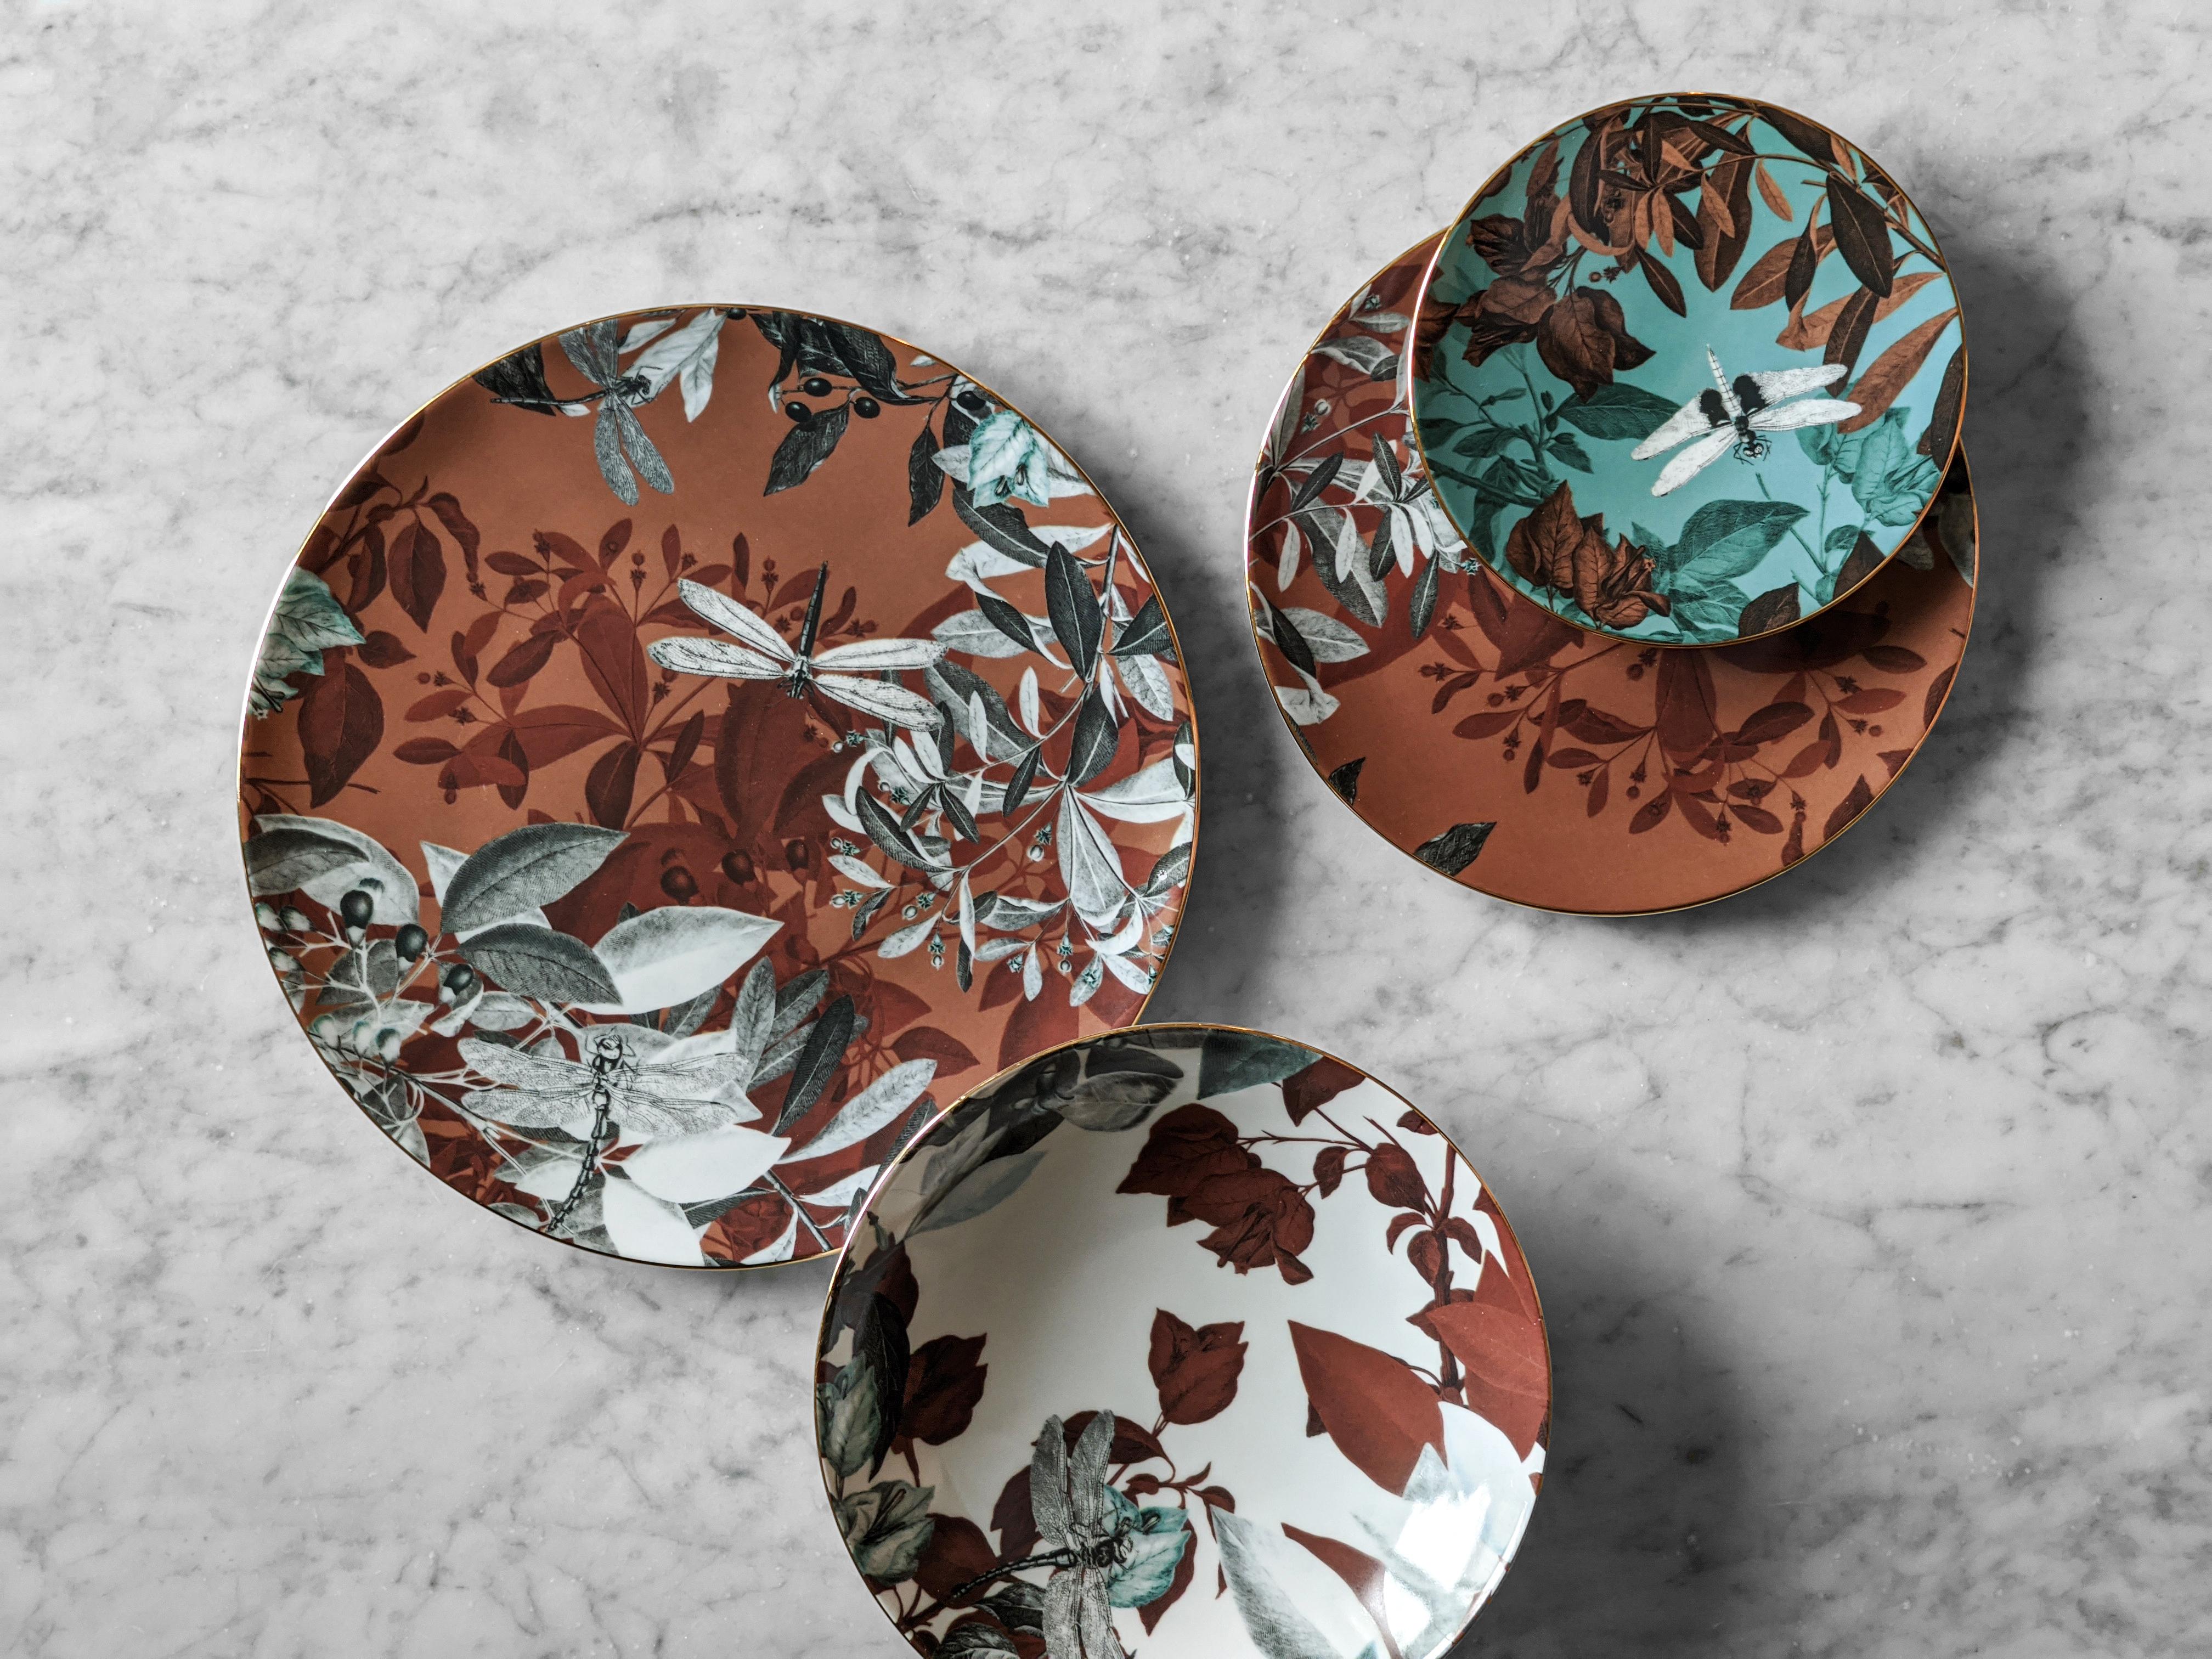 Black Dragon, Six Contemporary Porcelain Dinner Plates with Decorative Design For Sale 5